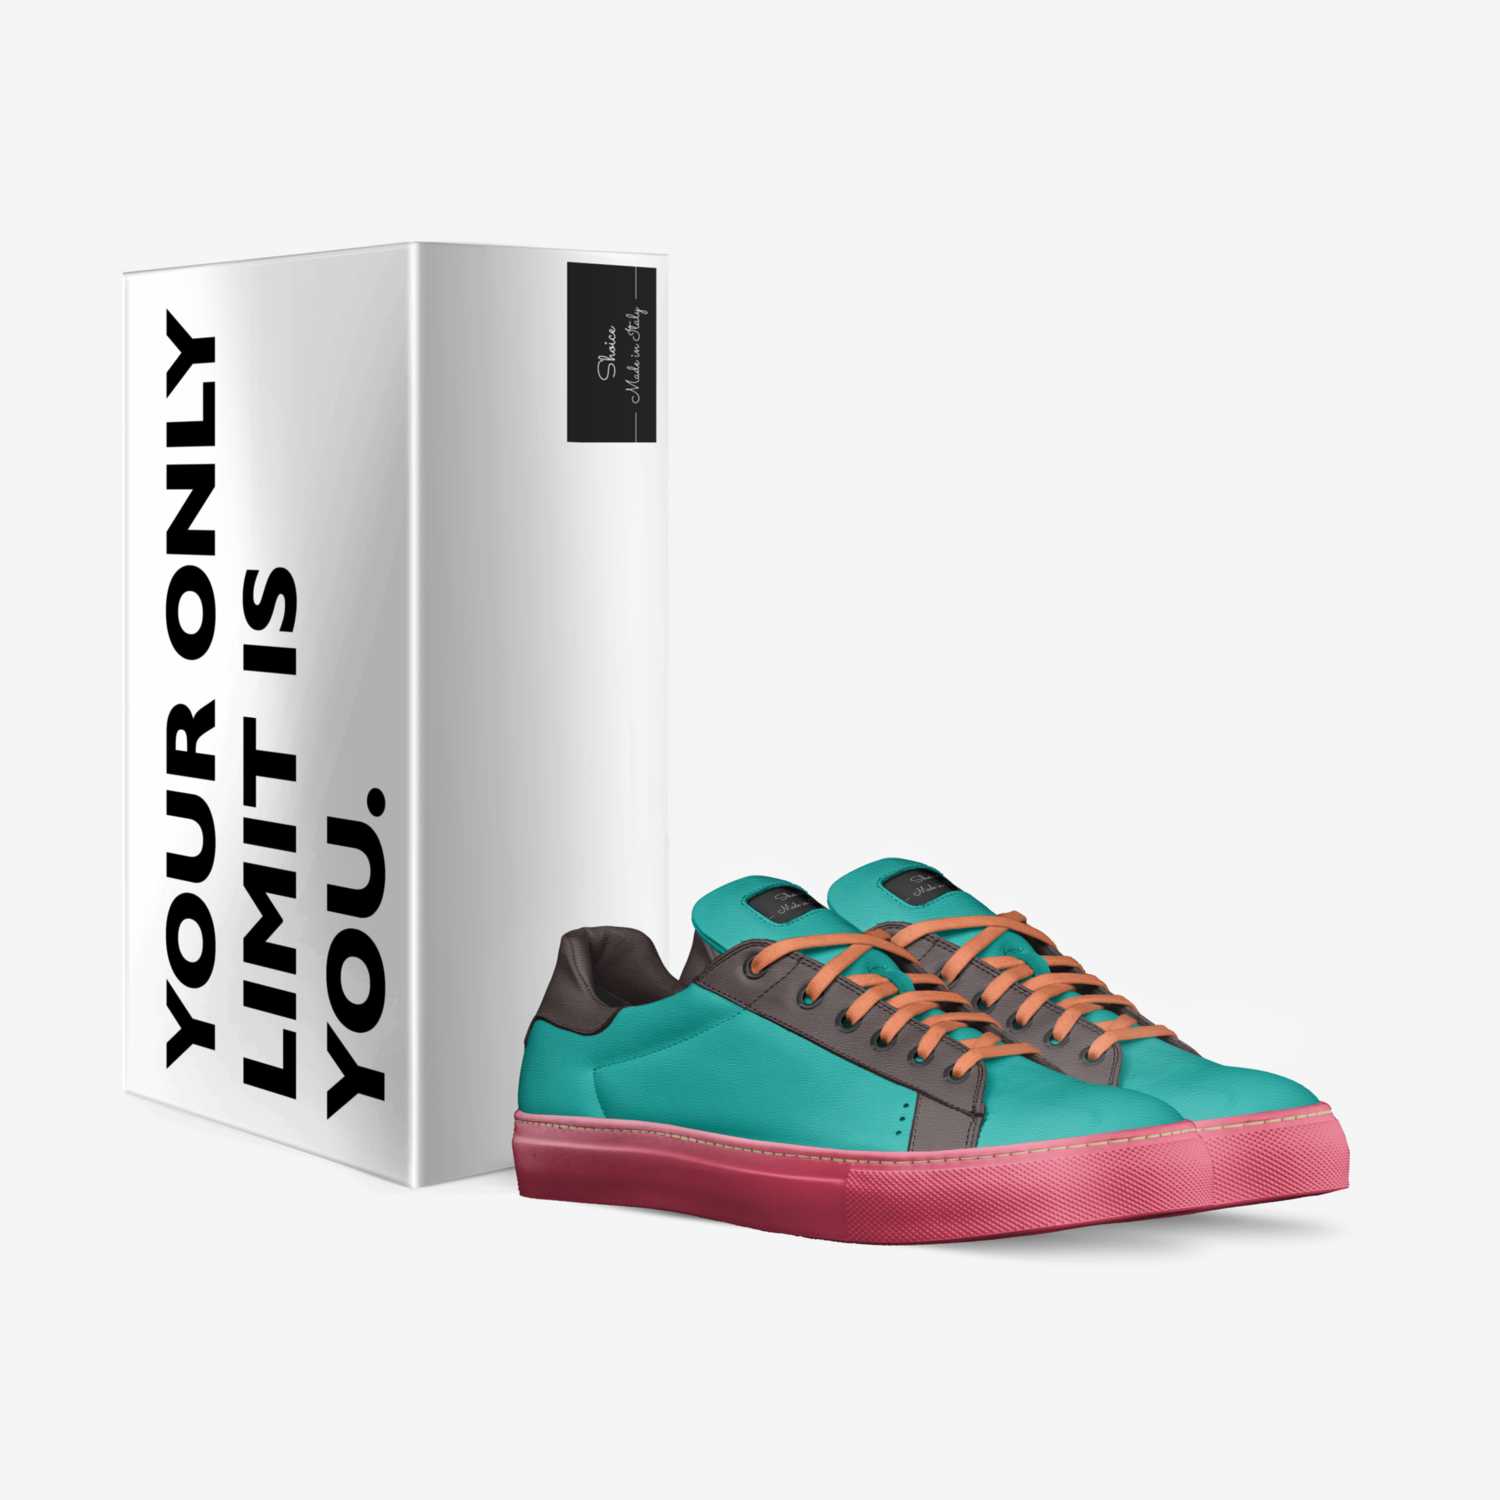 Shoice custom made in Italy shoes by Ricardo Fonseca | Box view